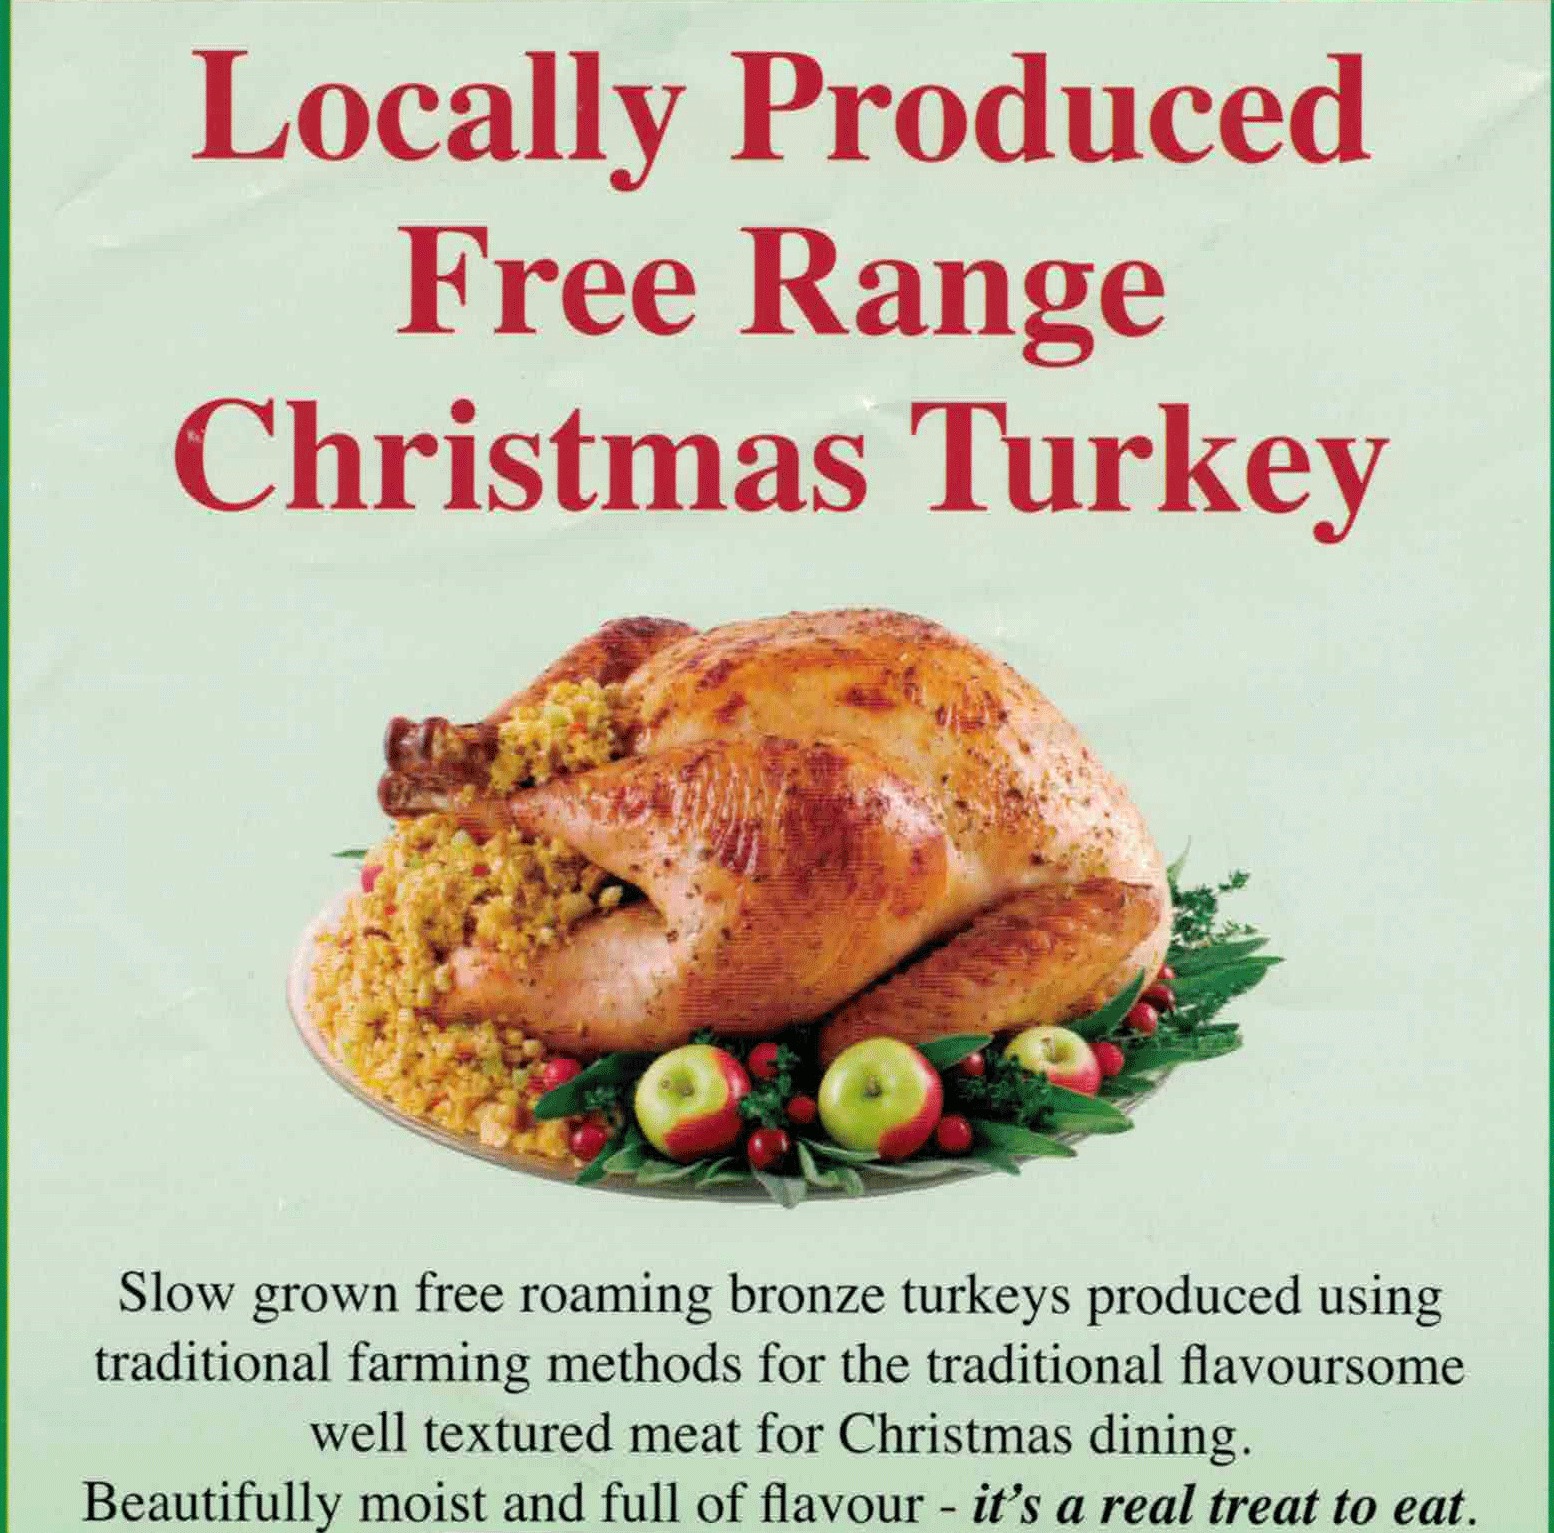 Locally produced free range Christmas Turkey